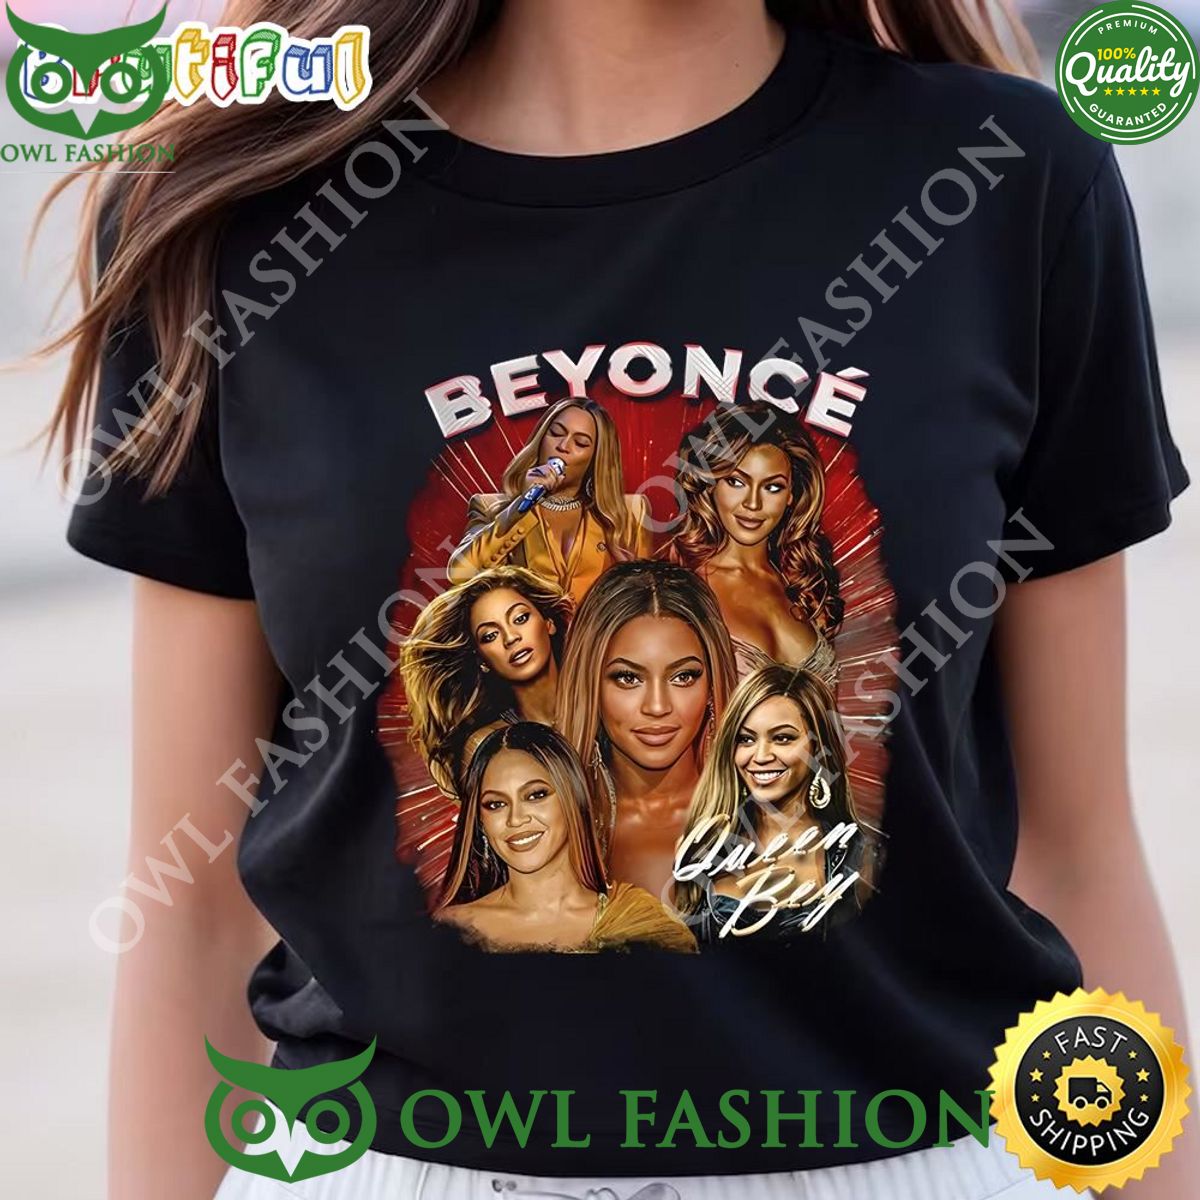 Beyonce Sexy Shirt Music Singer Hiphop Rapper Shirt